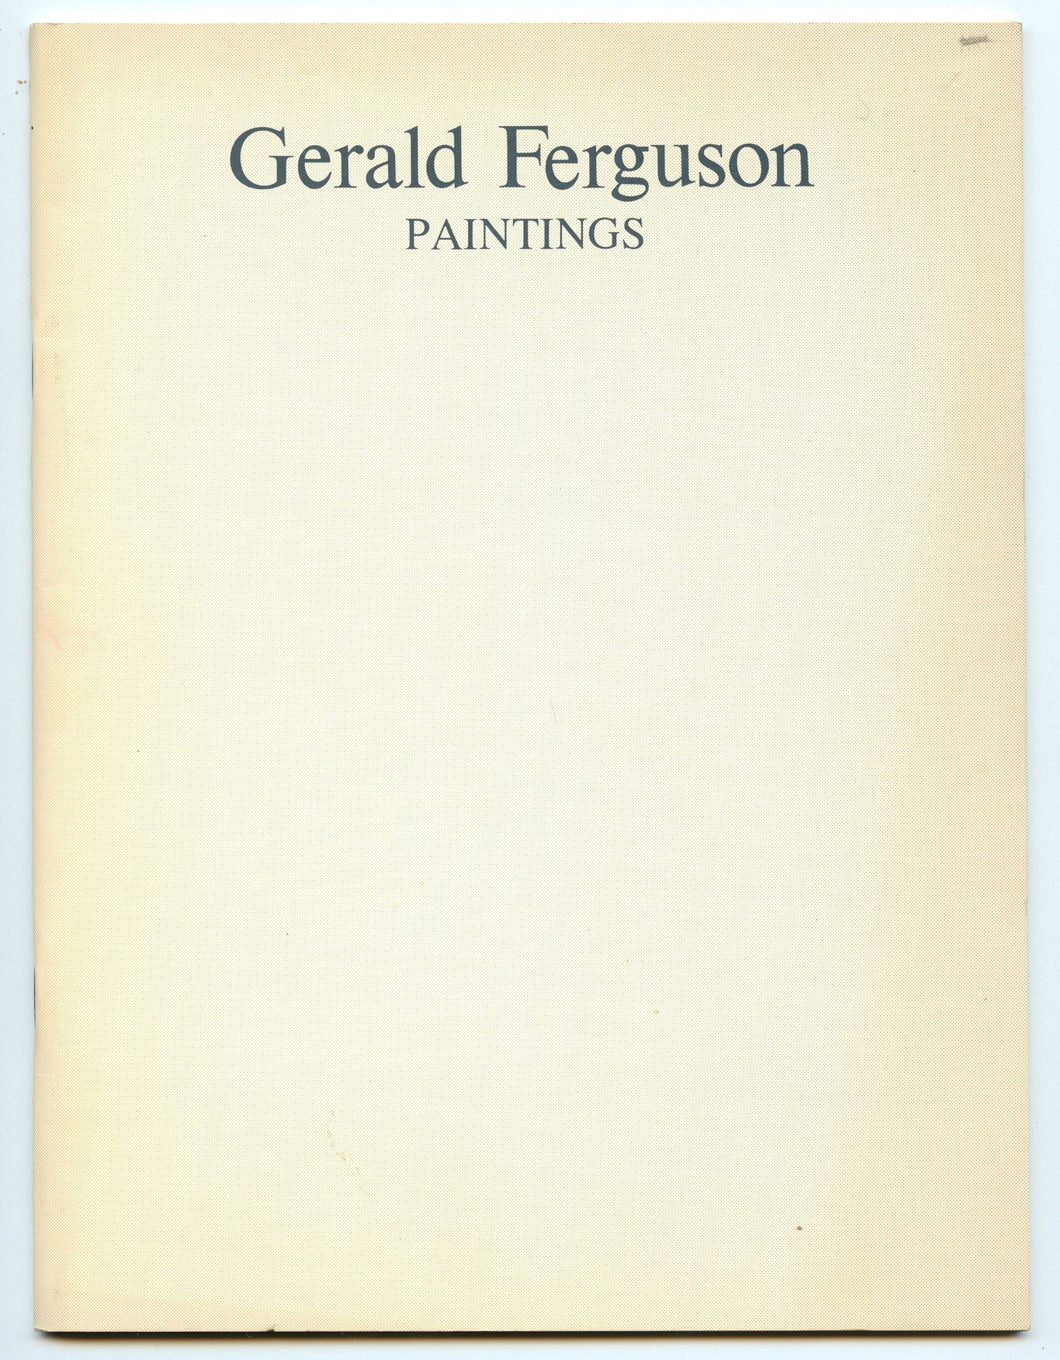 Gerald Ferguson: Paintings